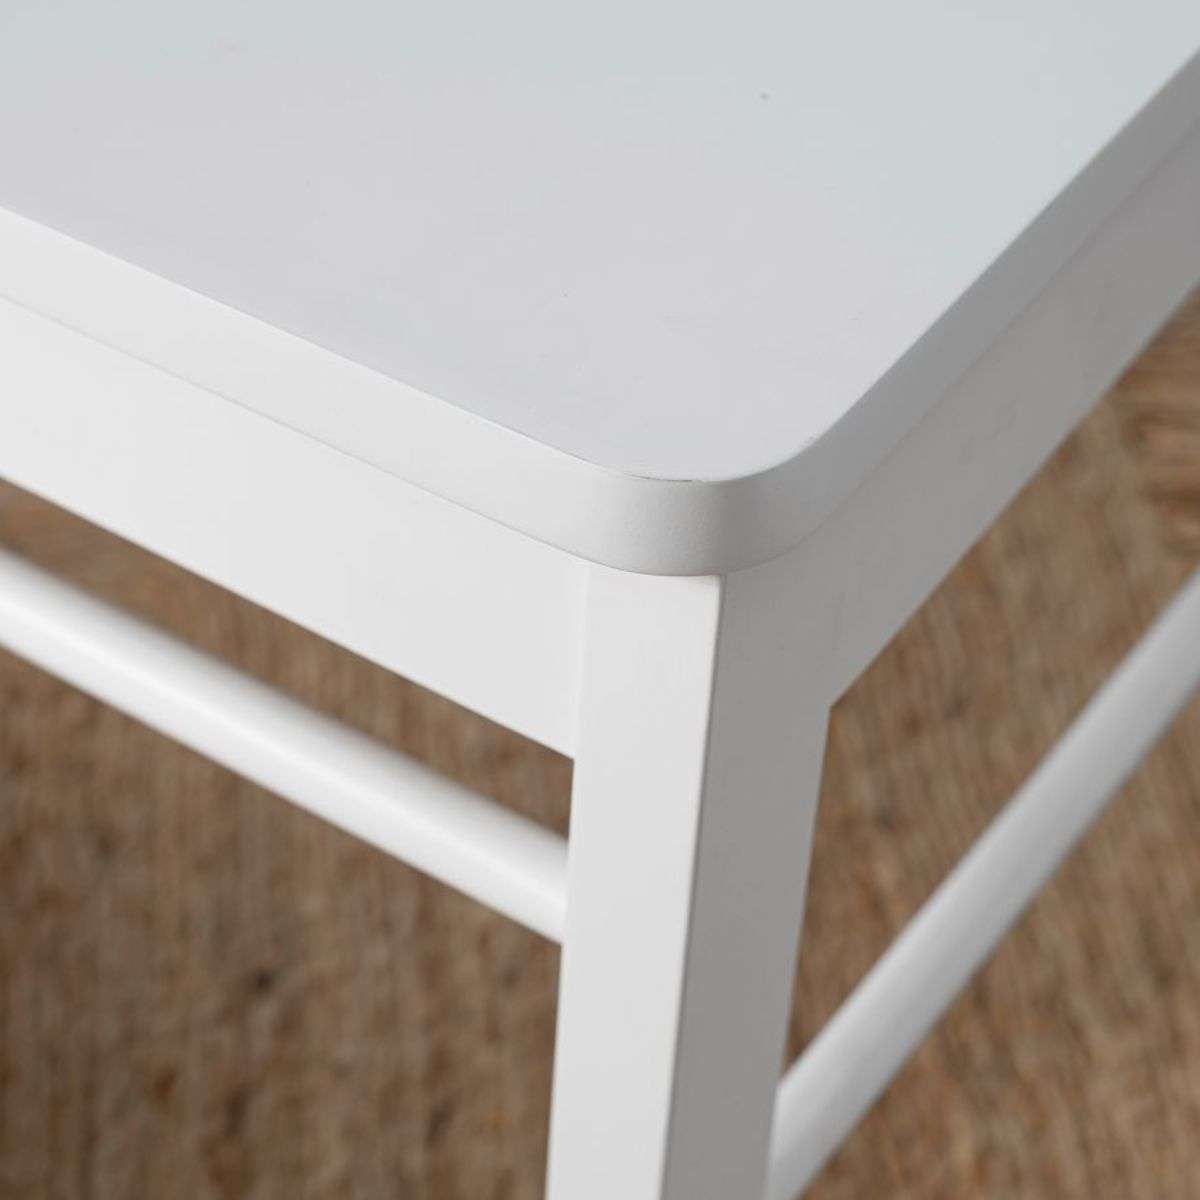 Hamptons Dining Chair - White